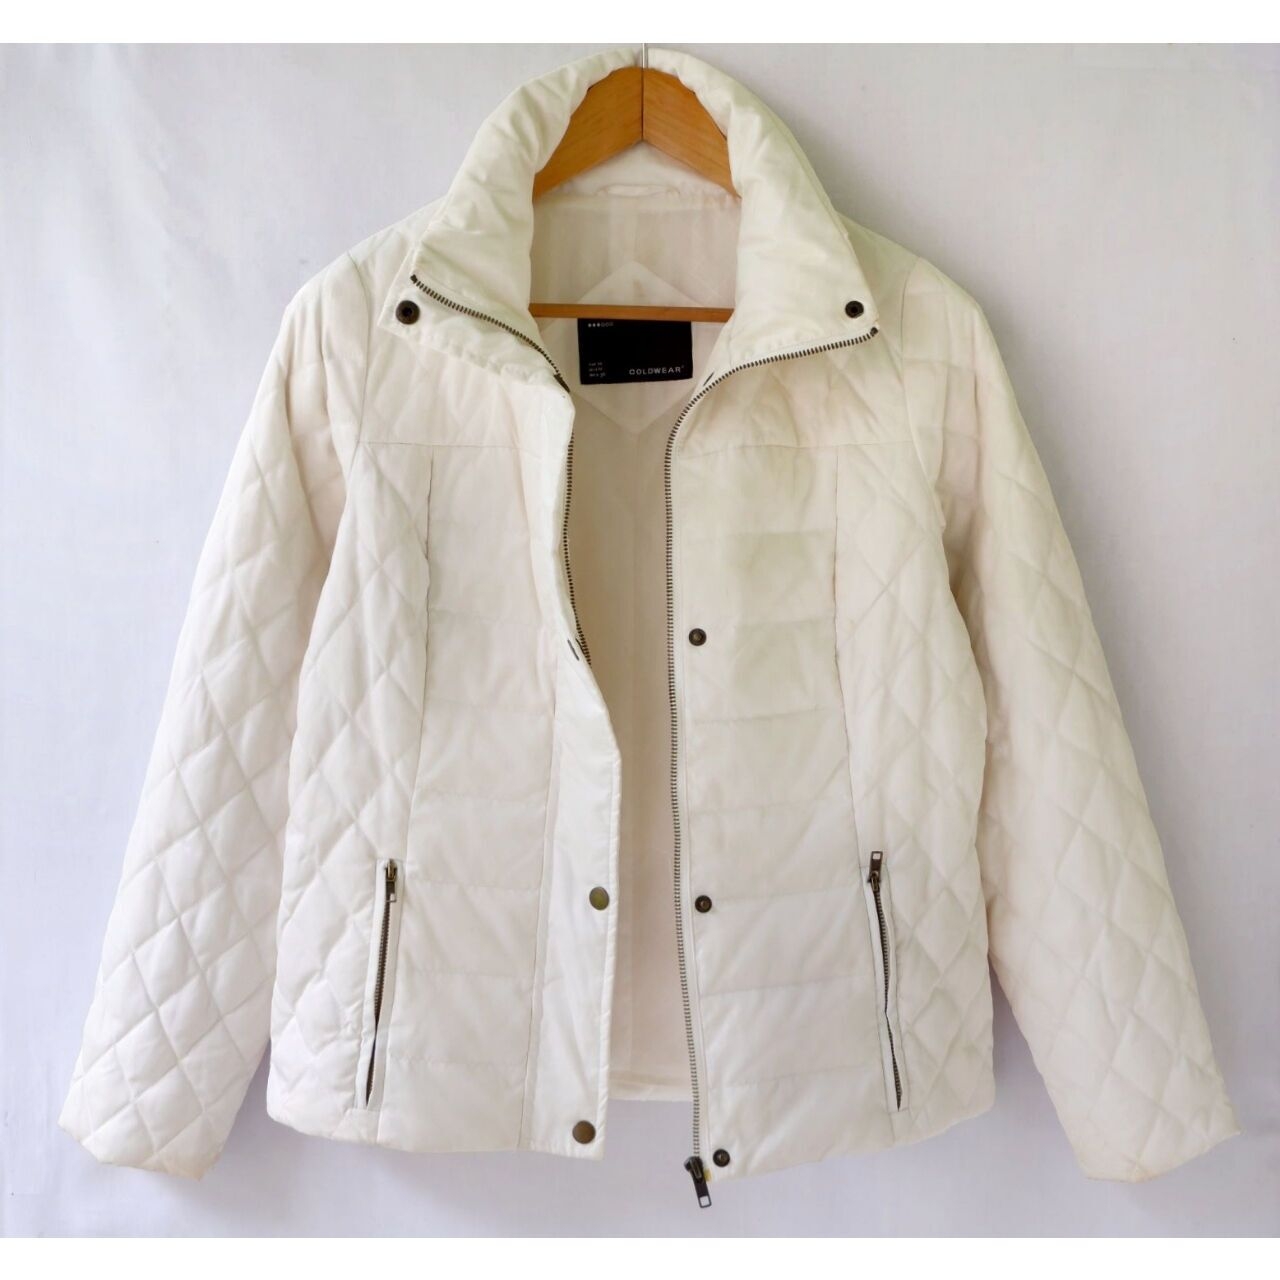 Coldwear White Jacket